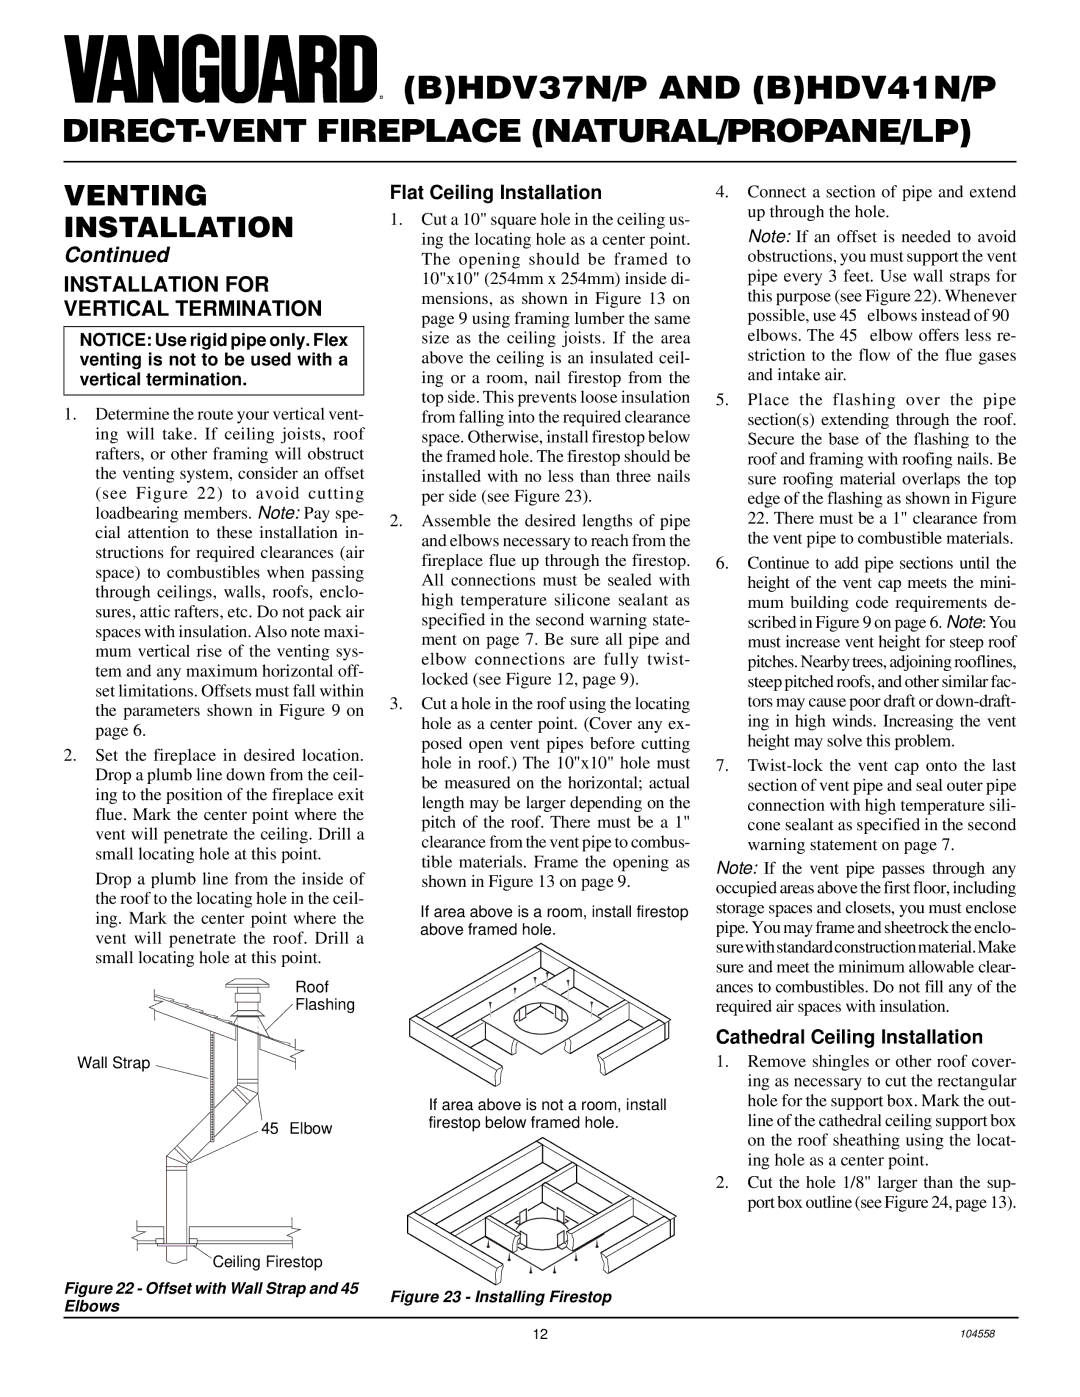 Desa BHDV41N/P, BHDV37N/P Installation for Vertical Termination, Flat Ceiling Installation, Cathedral Ceiling Installation 